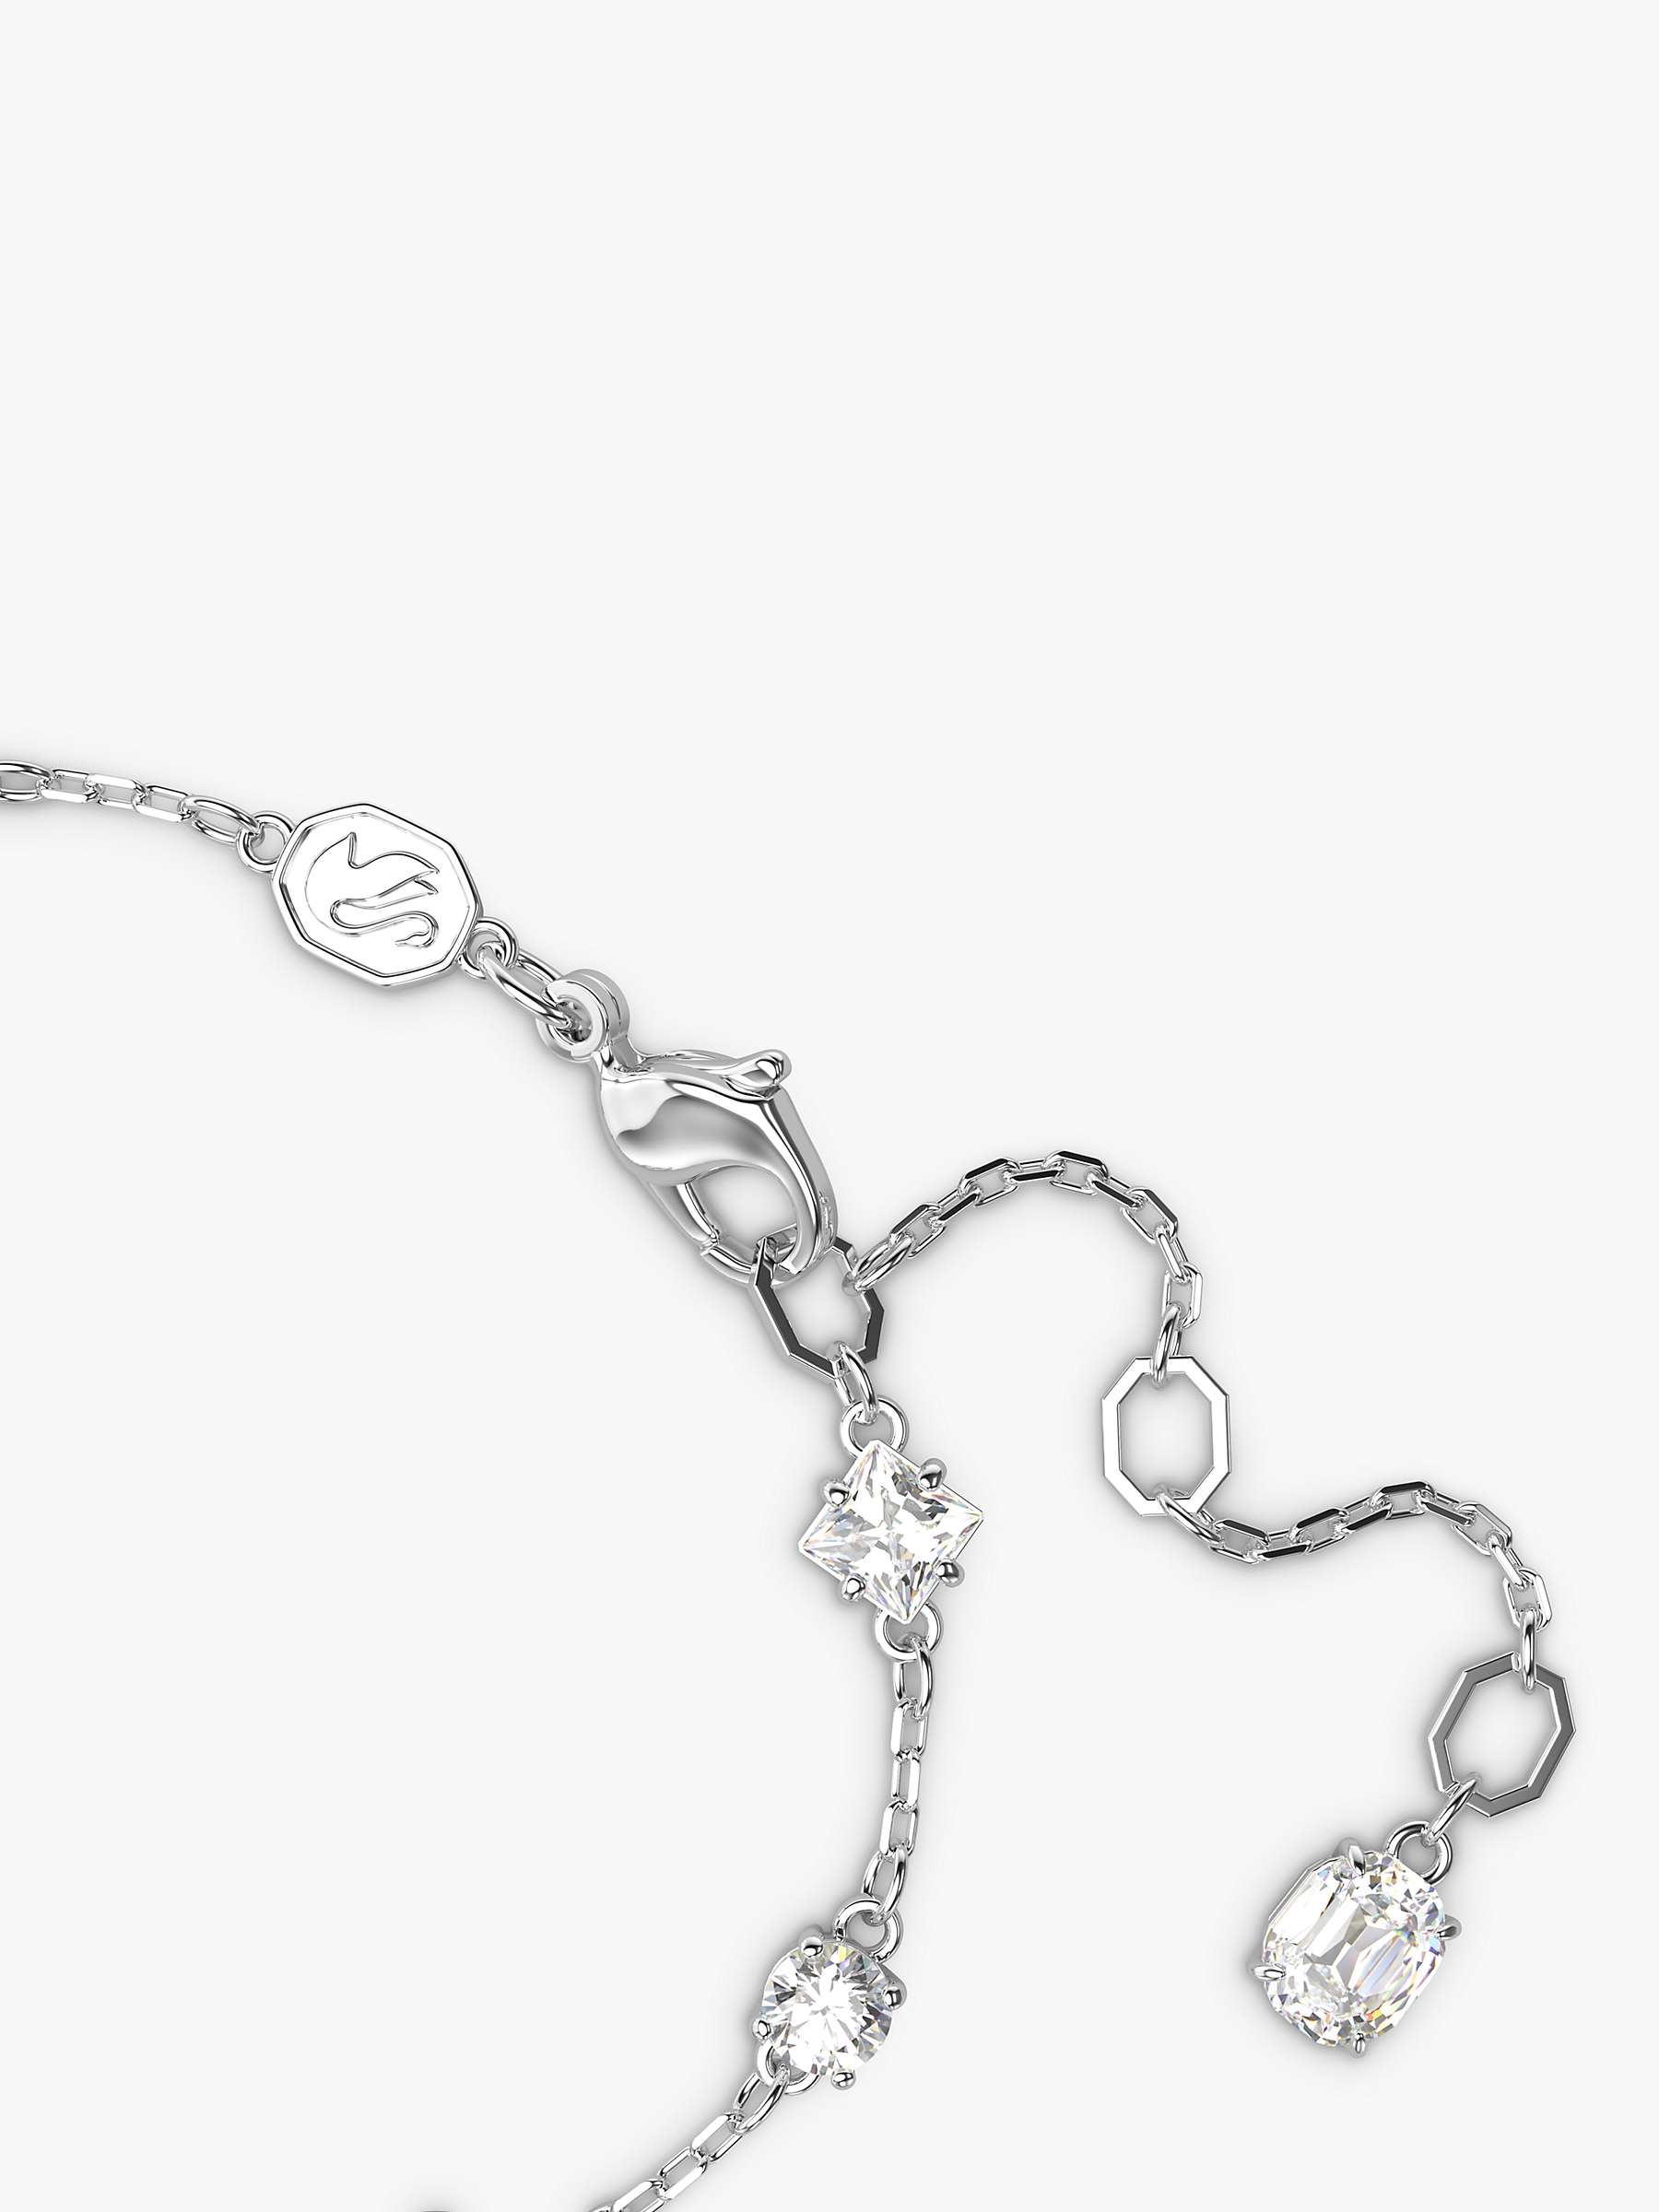 Buy Swarovski Mesmera Crystal Chain Bracelet, Silver Online at johnlewis.com